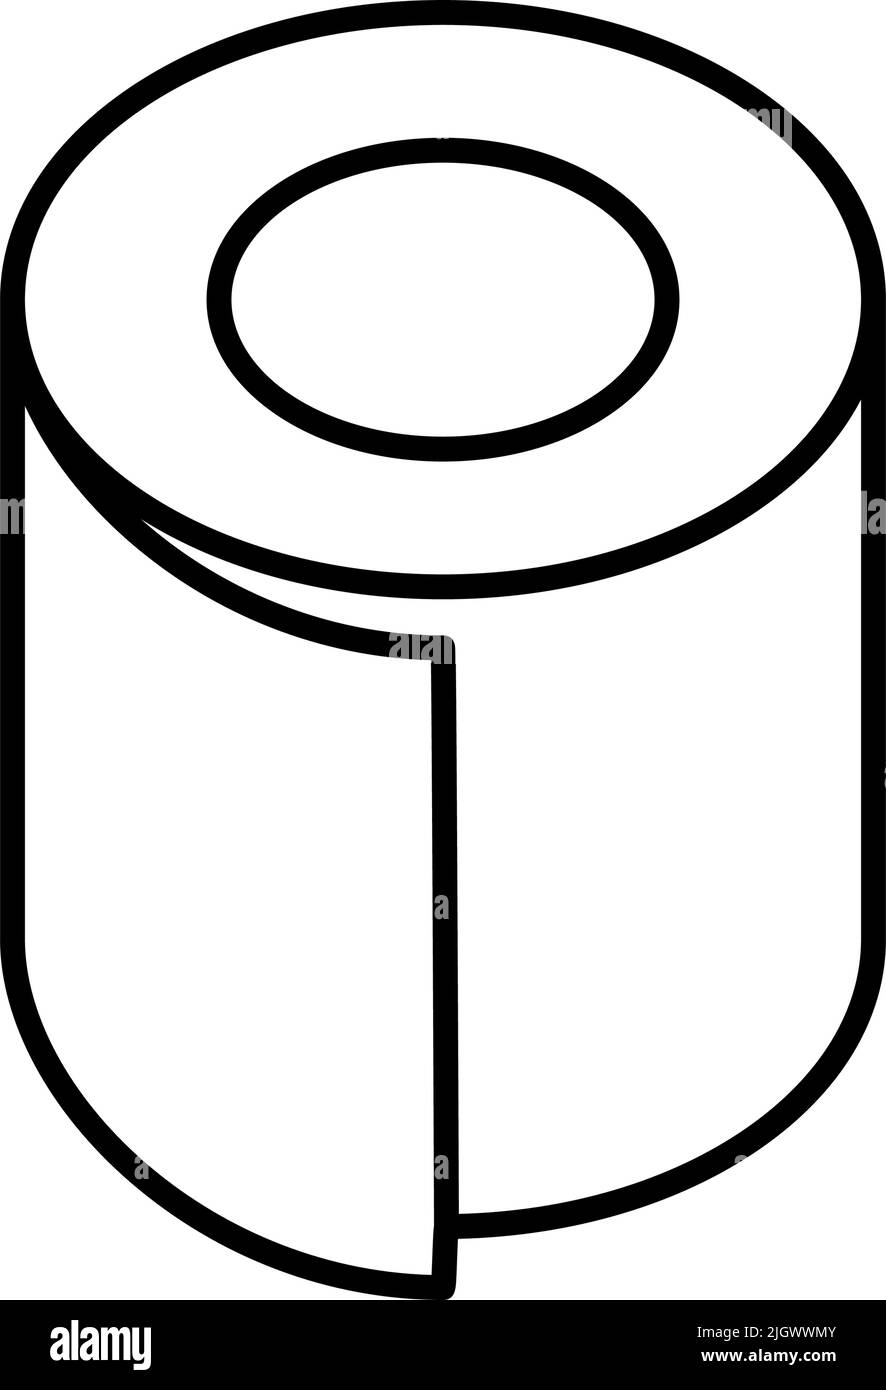 Toilet paper roll icon. Tissue icon. Editable vector. Stock Vector